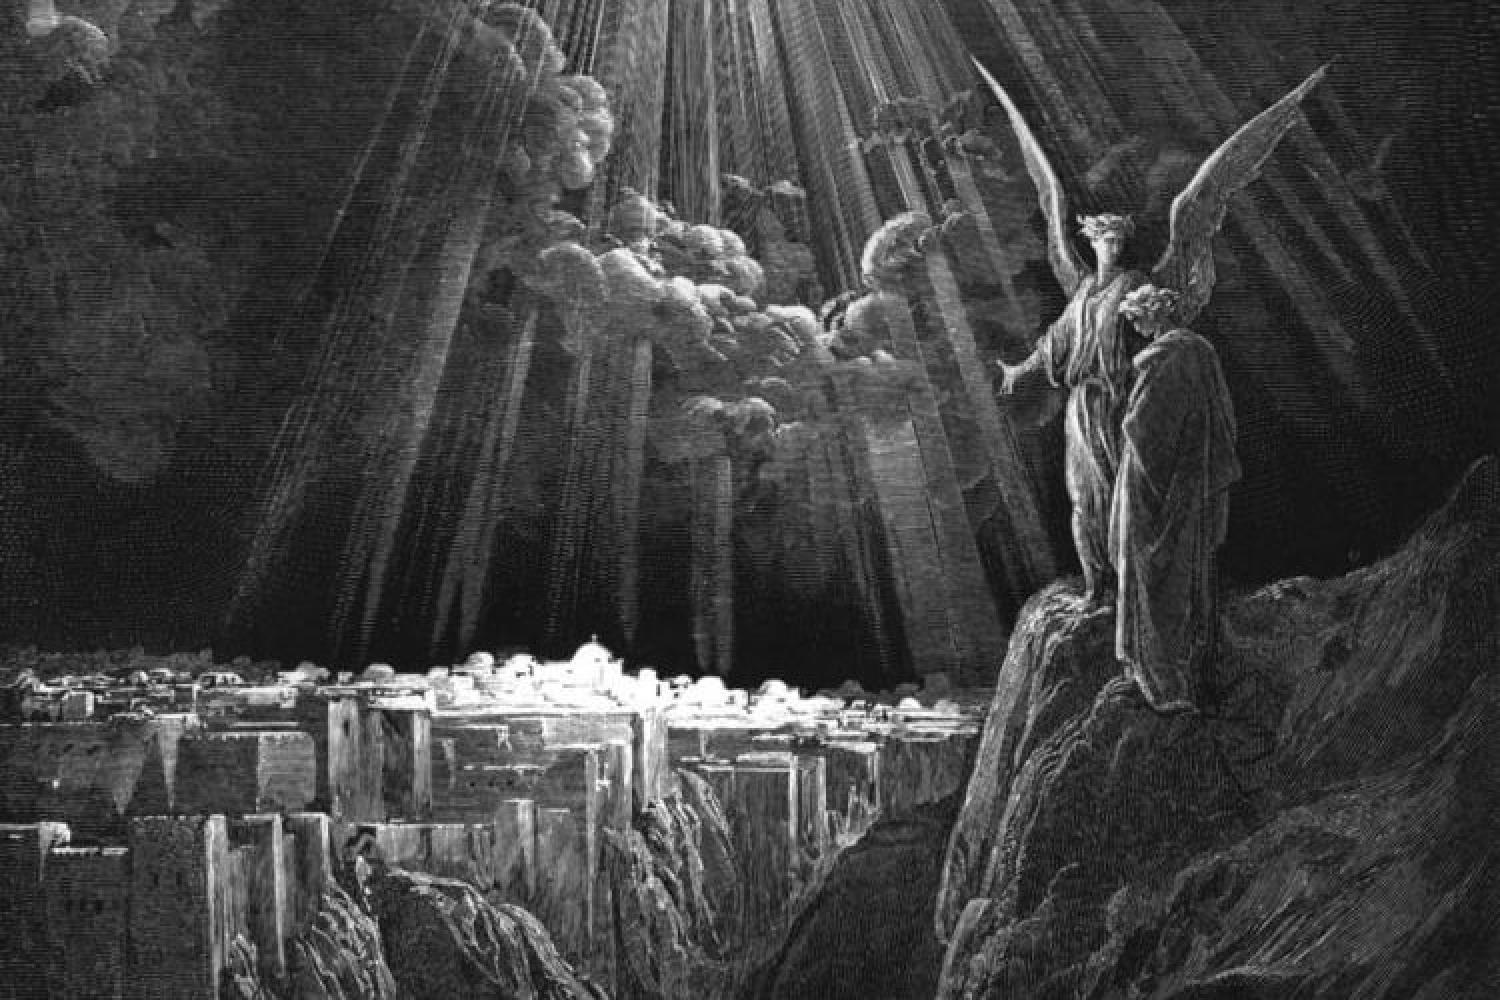 Gustave Dore's "The New Jerusalem"